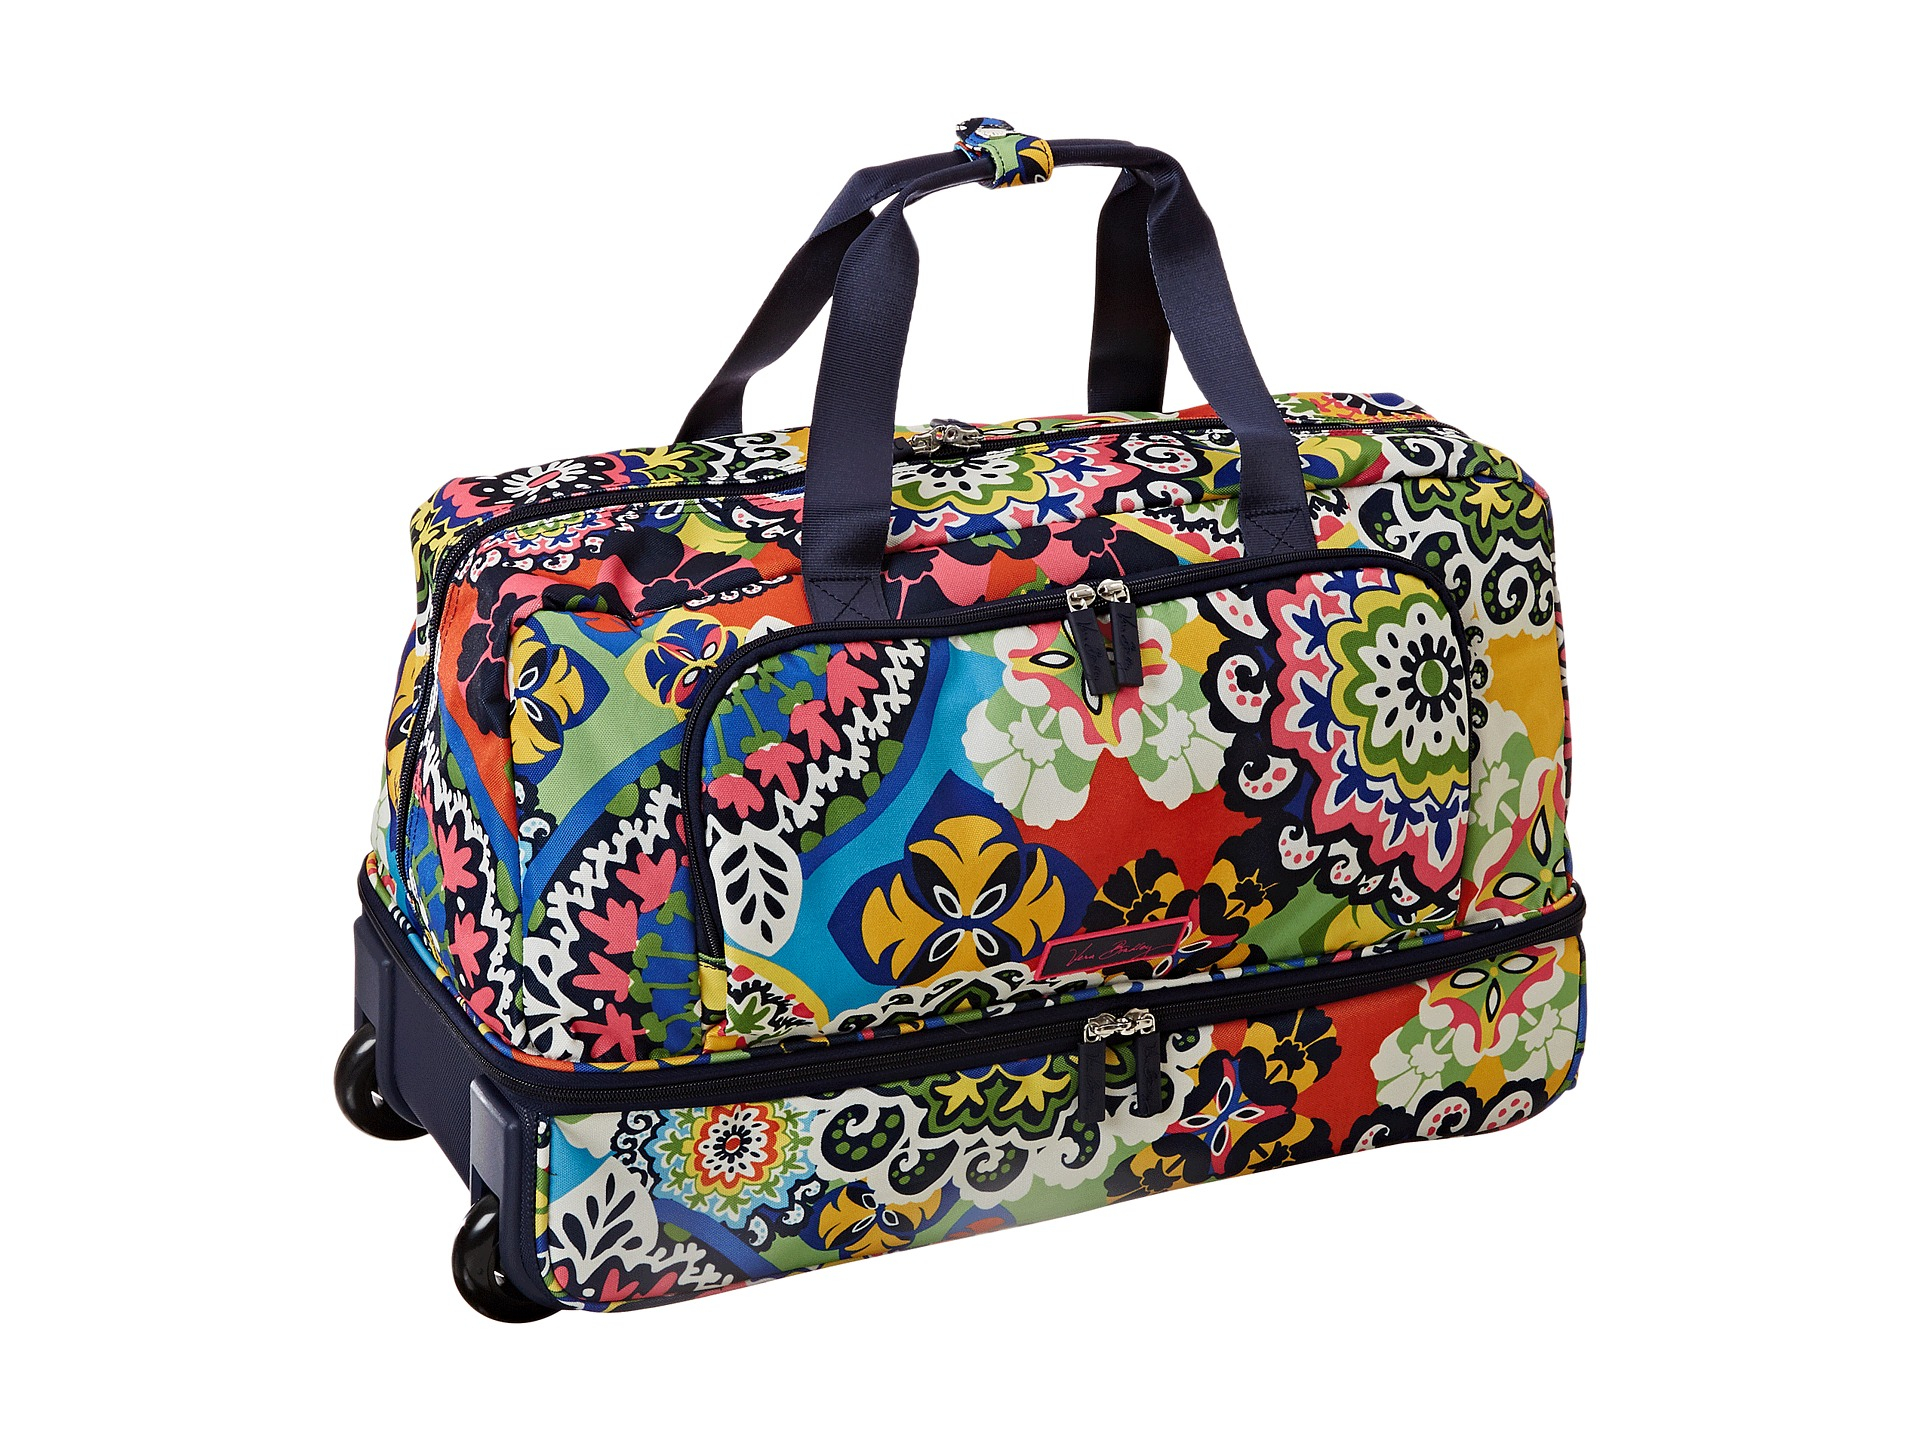 vera bradley travel bag with wheels